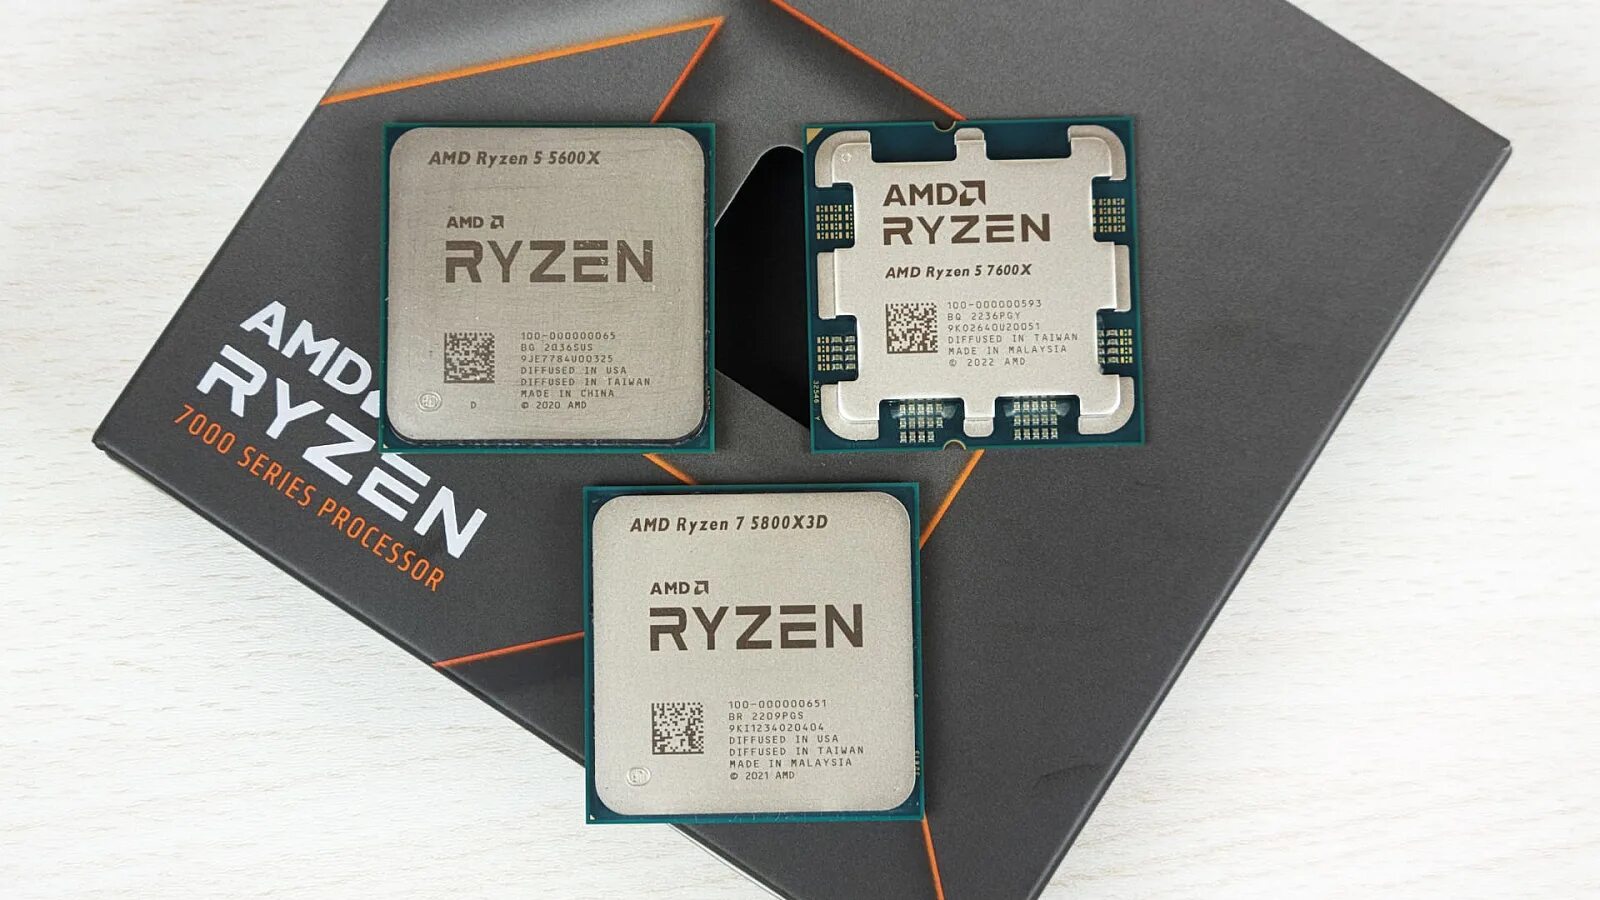 Ryzen 5 7600x oem. Ryzen 7600x. Ryzen 5 7600x. AMD Ryzen 5 7600x am5, 6 x 4700 МГЦ. AMD Ryzen 5 7600x 6-Core Processor 4.70 GHZ.